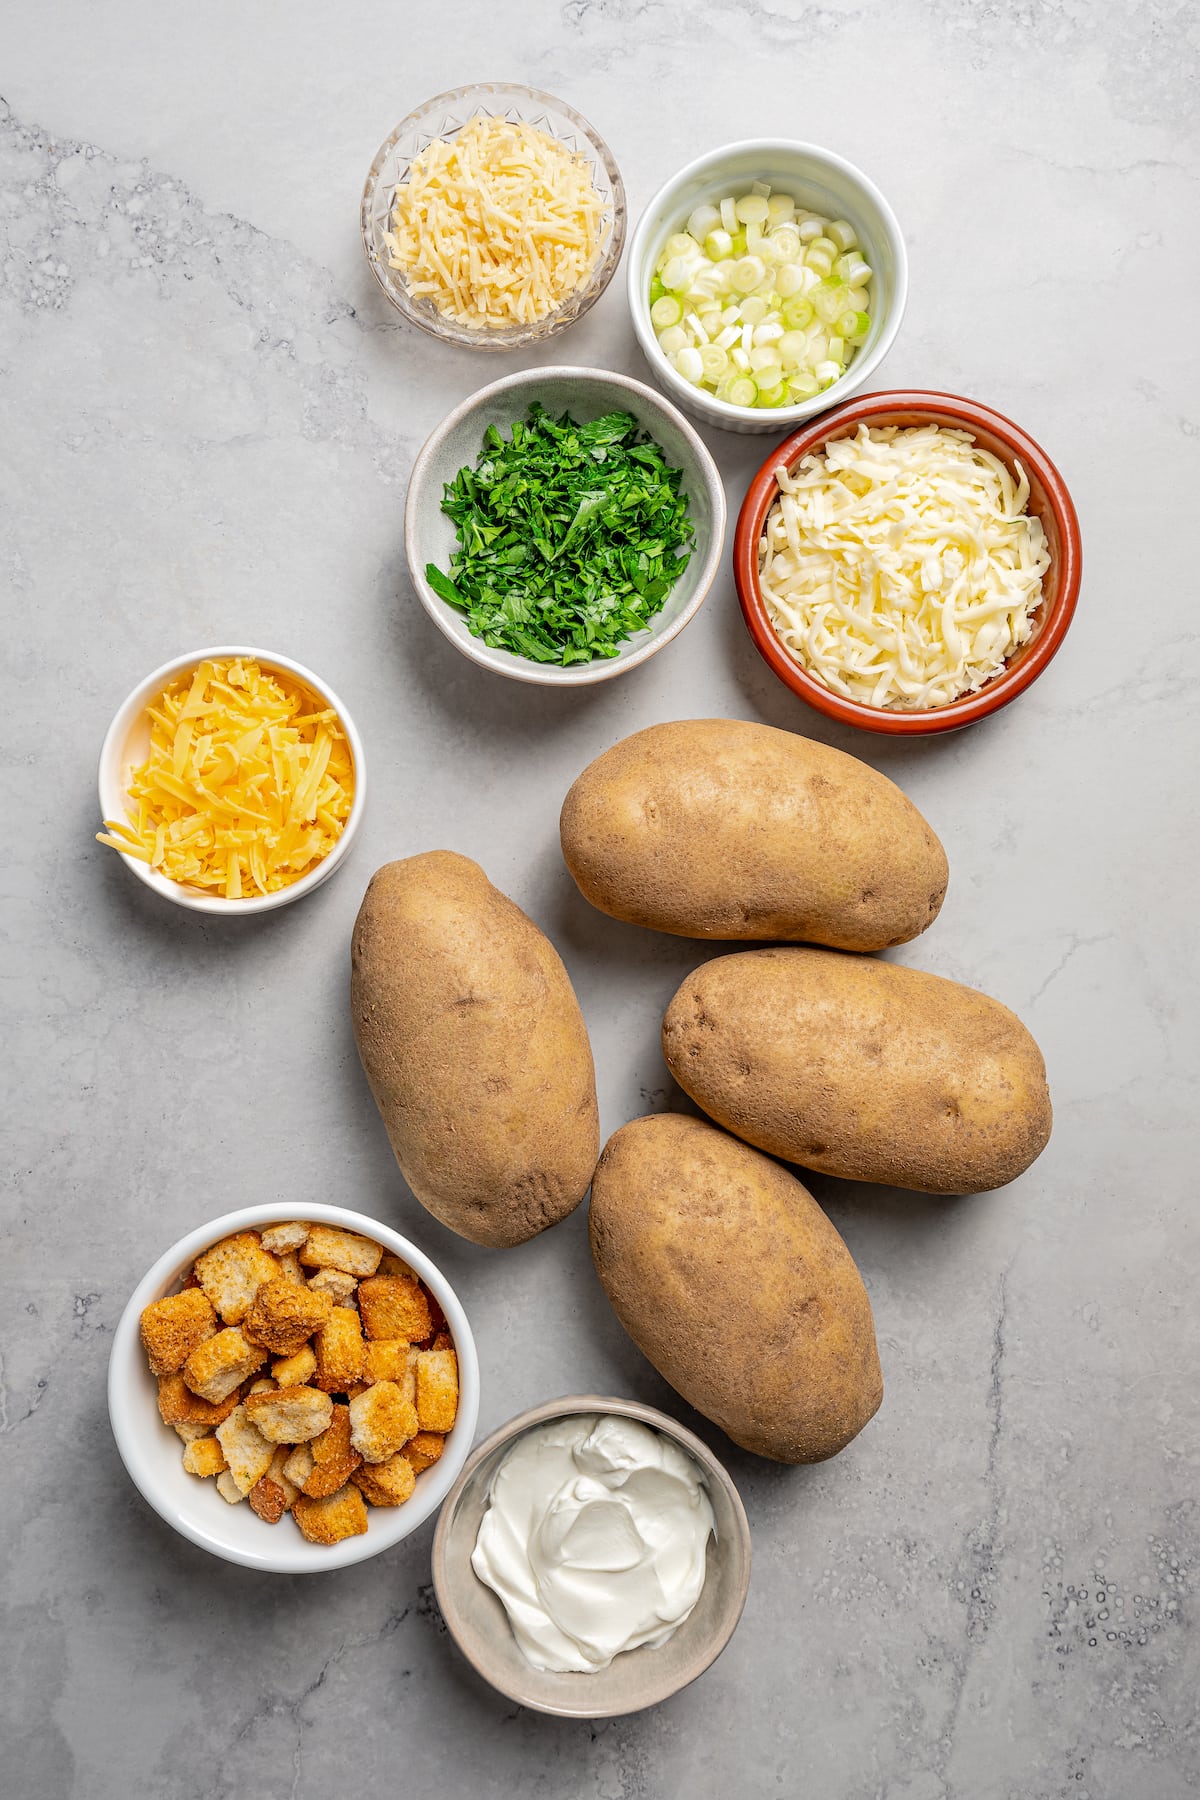 Ingredients for crispy potato skins.